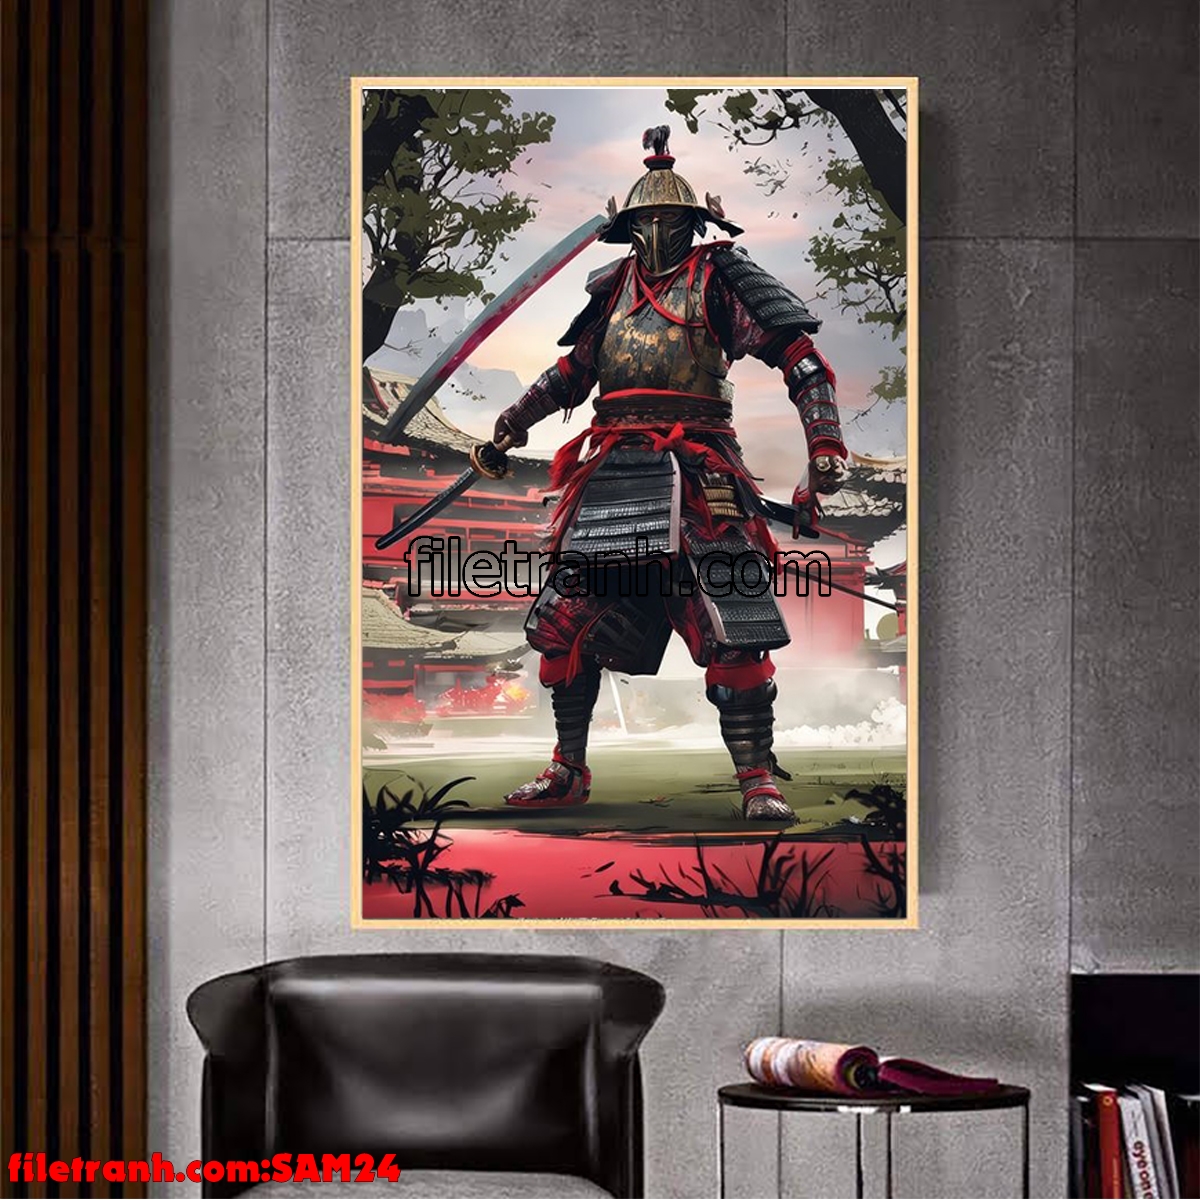 https://filetranh.com/samurai/file-tranh-samurai-vo-si-nhat-ban-sam24.html